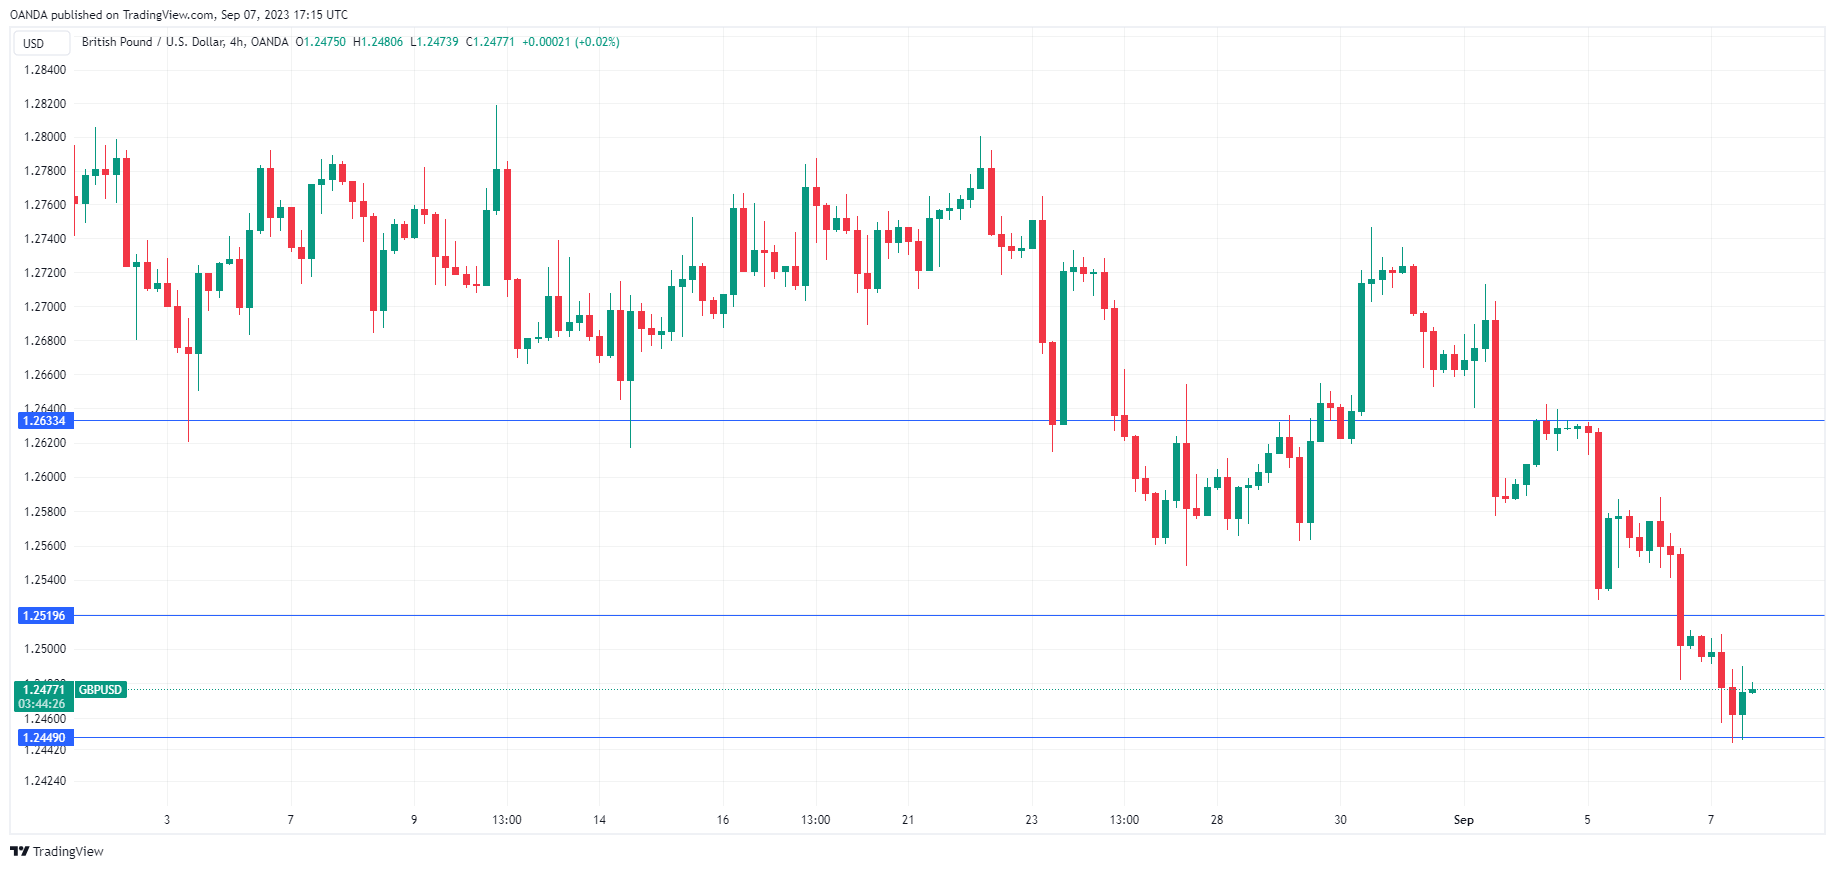 GBP/USD-4Hour Chart